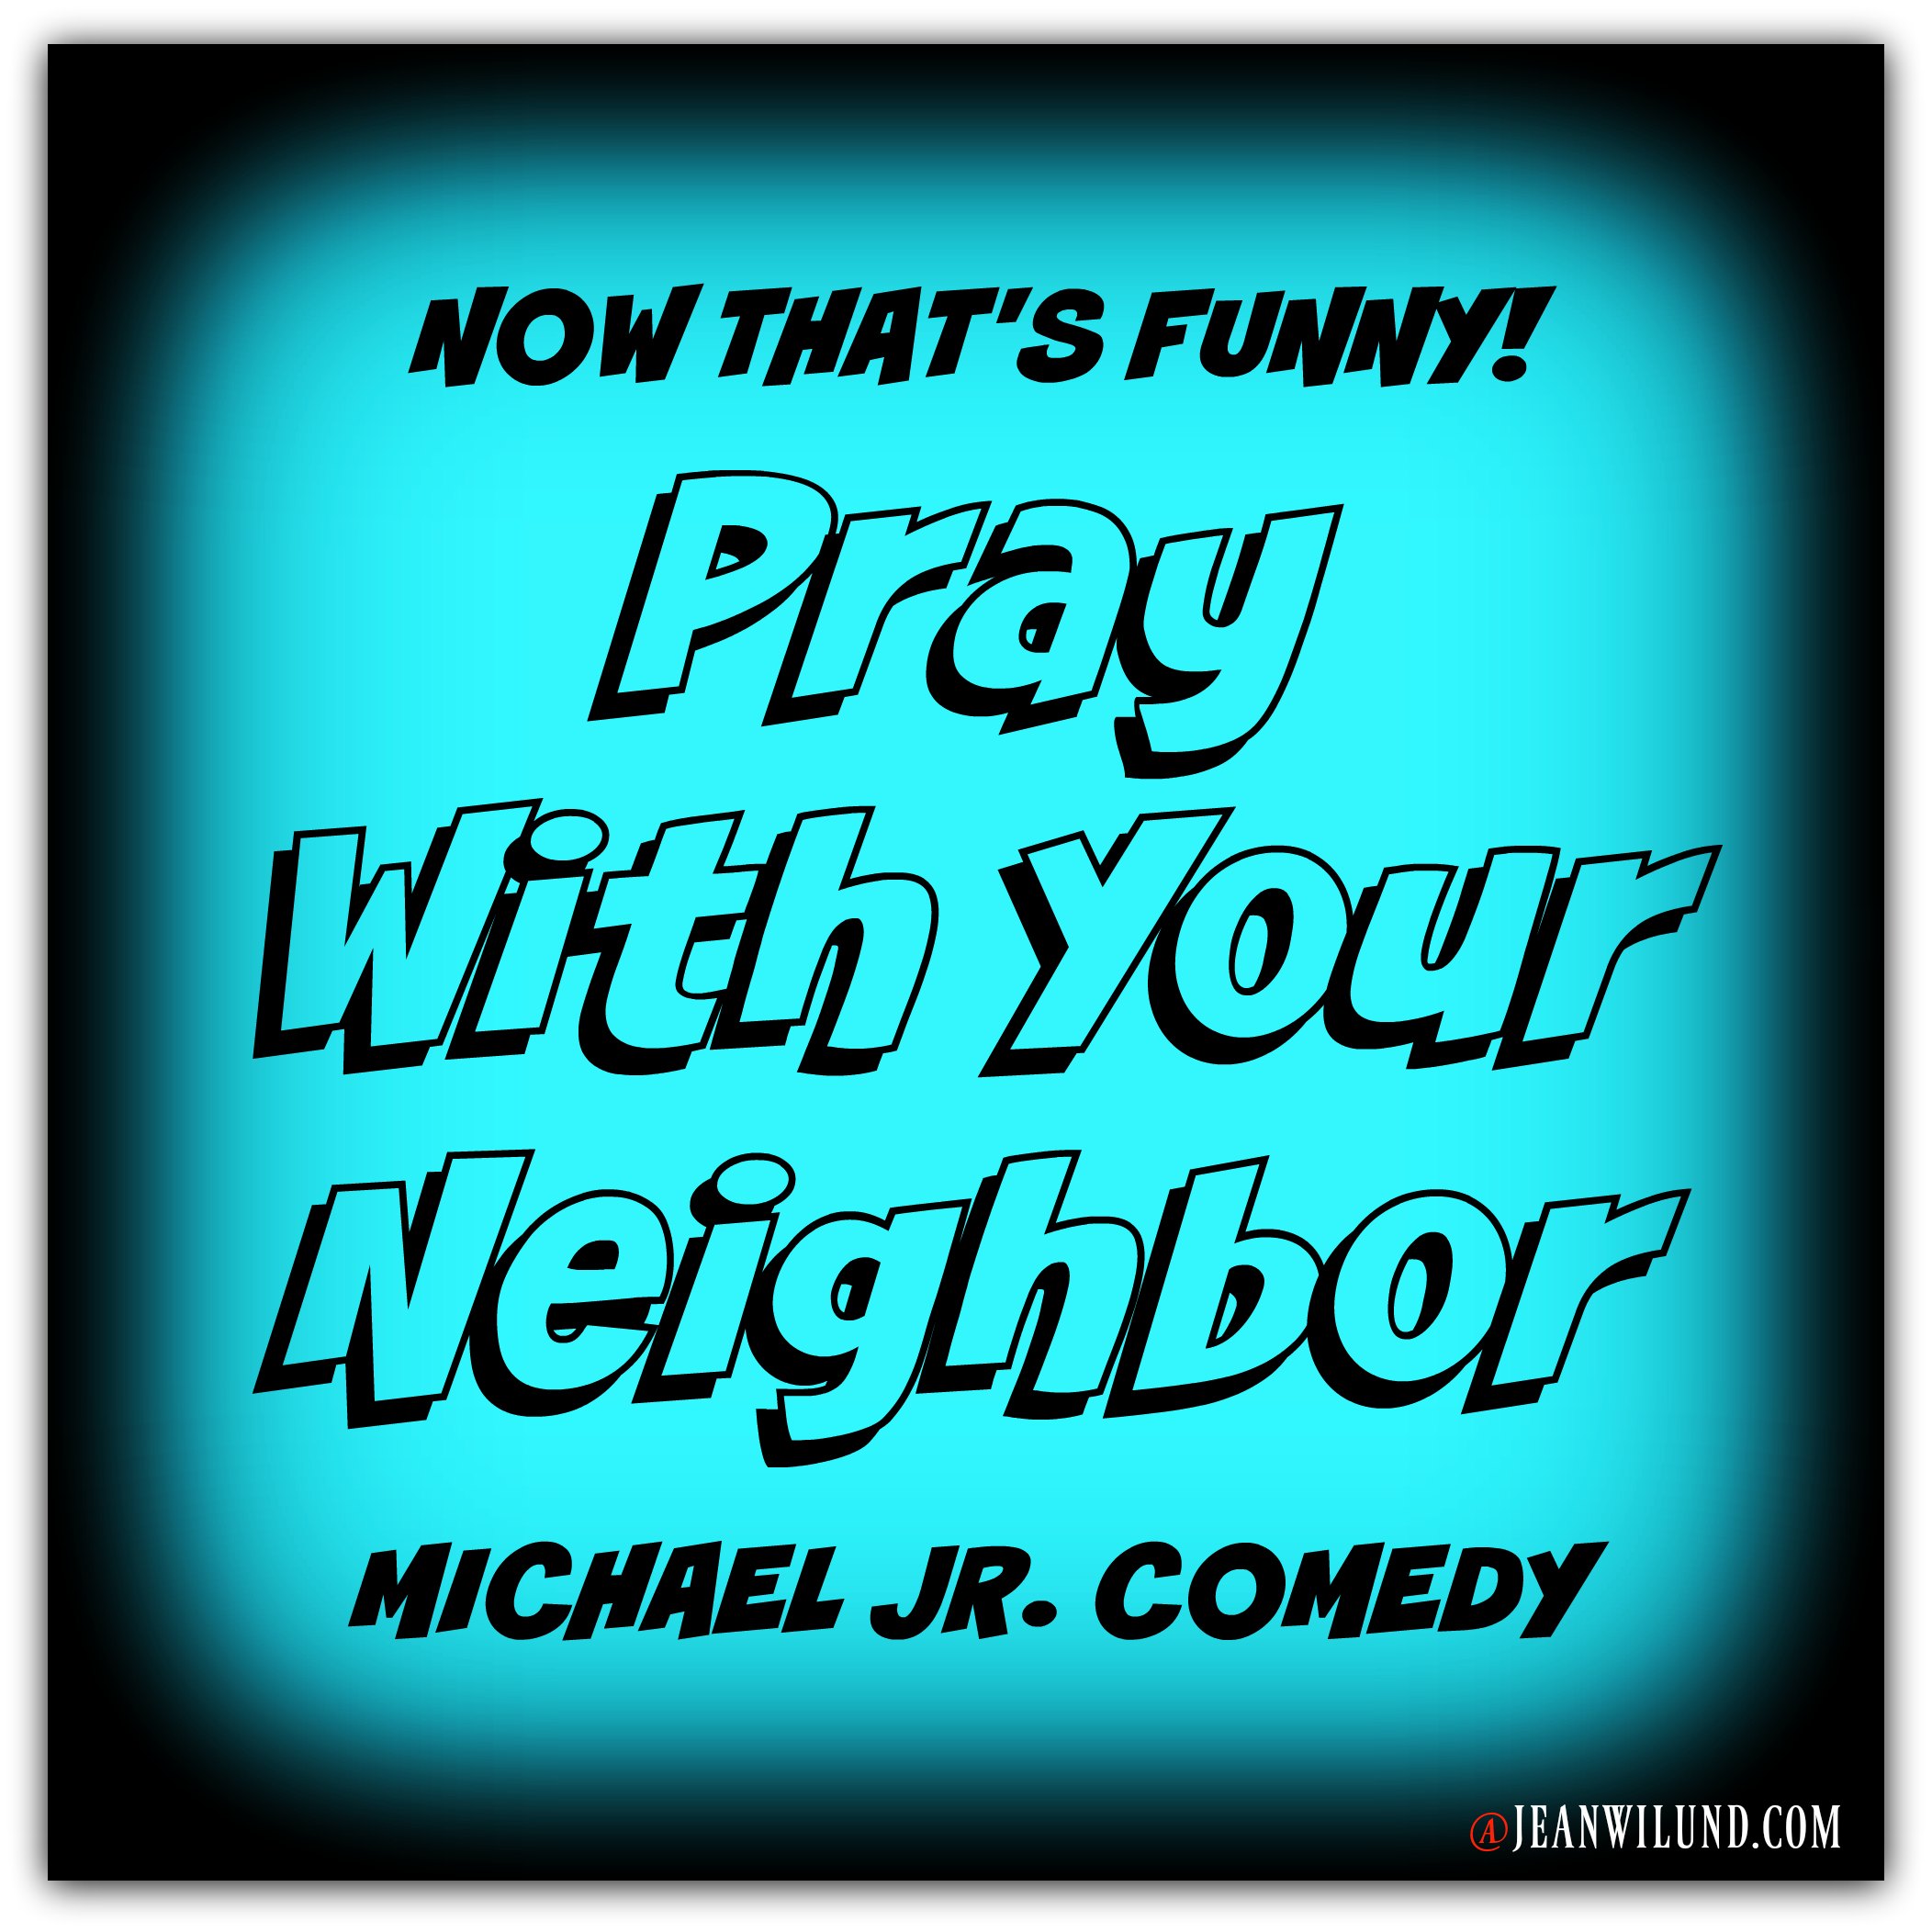 Pray With Your Neighbor by Michael Jr Comedy via www.JeanWilund.com